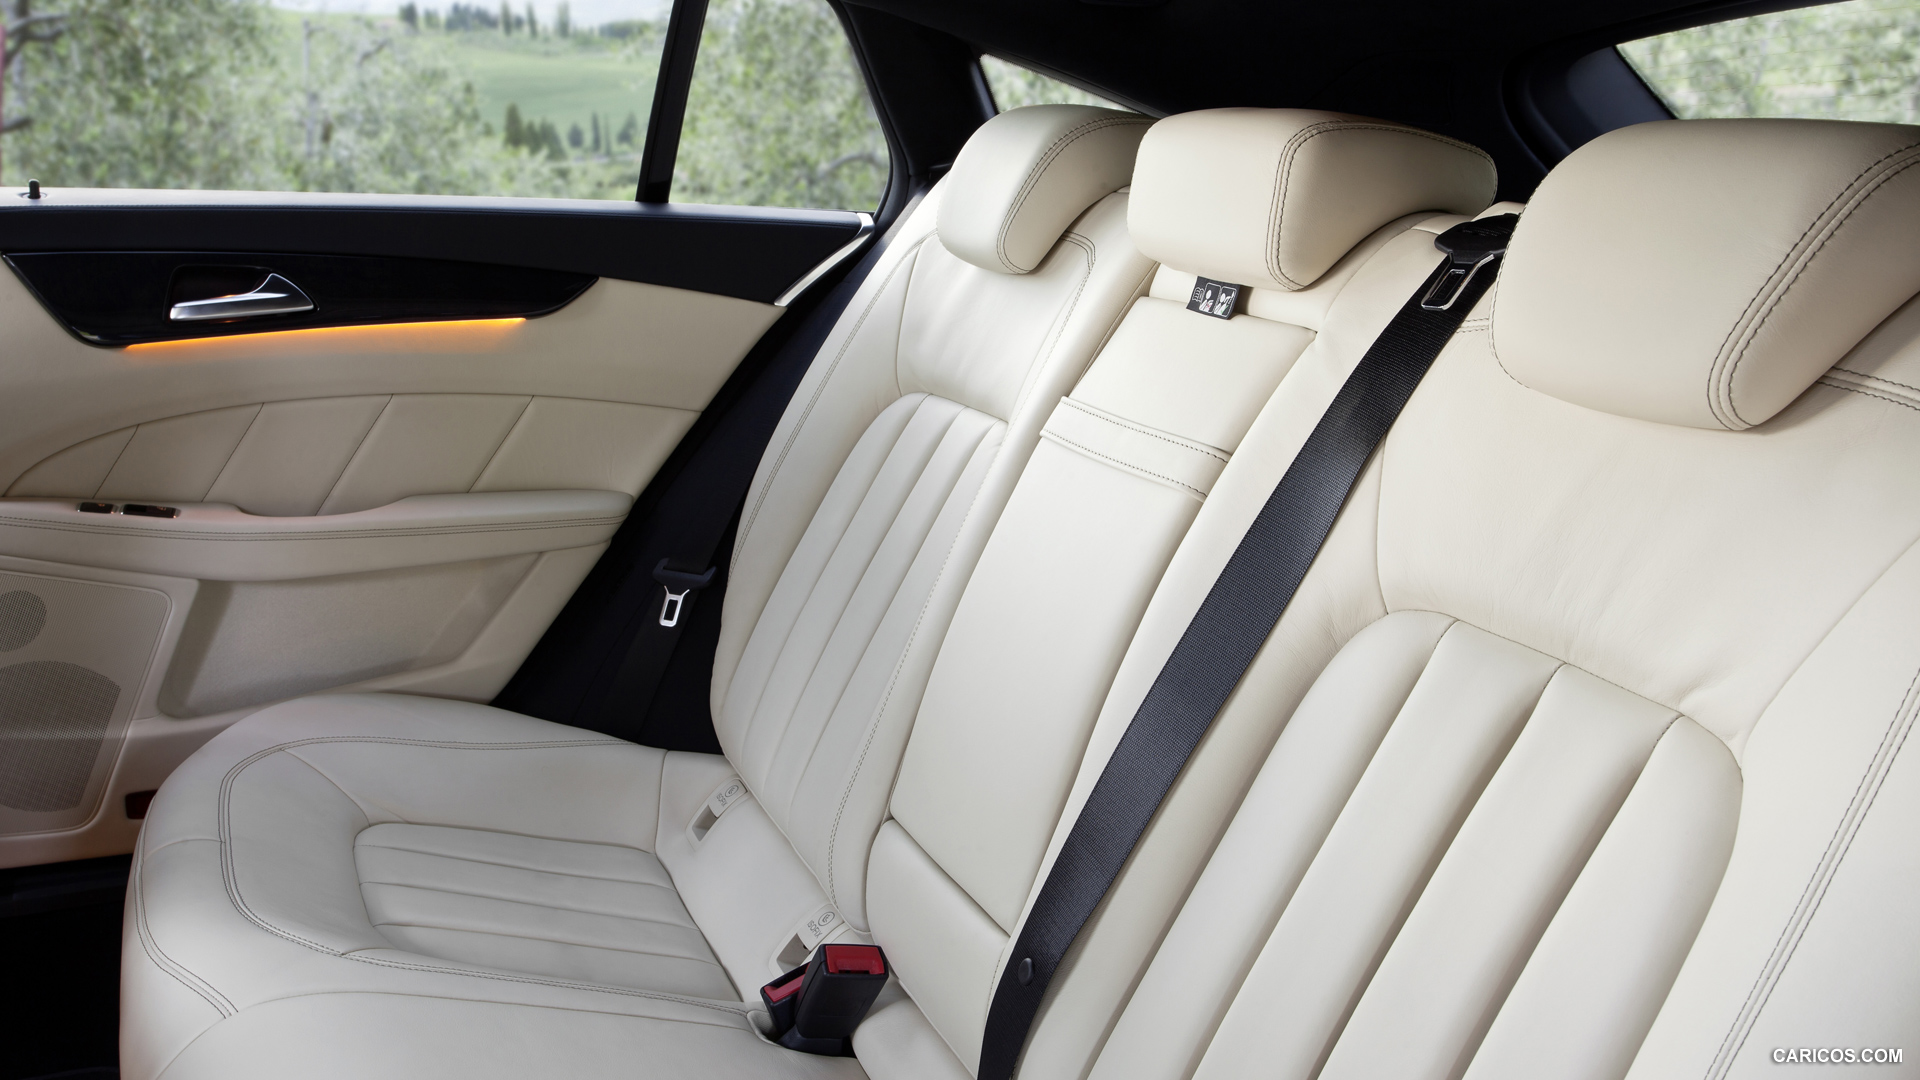 2013 Mercedes-Benz CLS Shooting Brake - Interior Rear Seats, #31 of 184